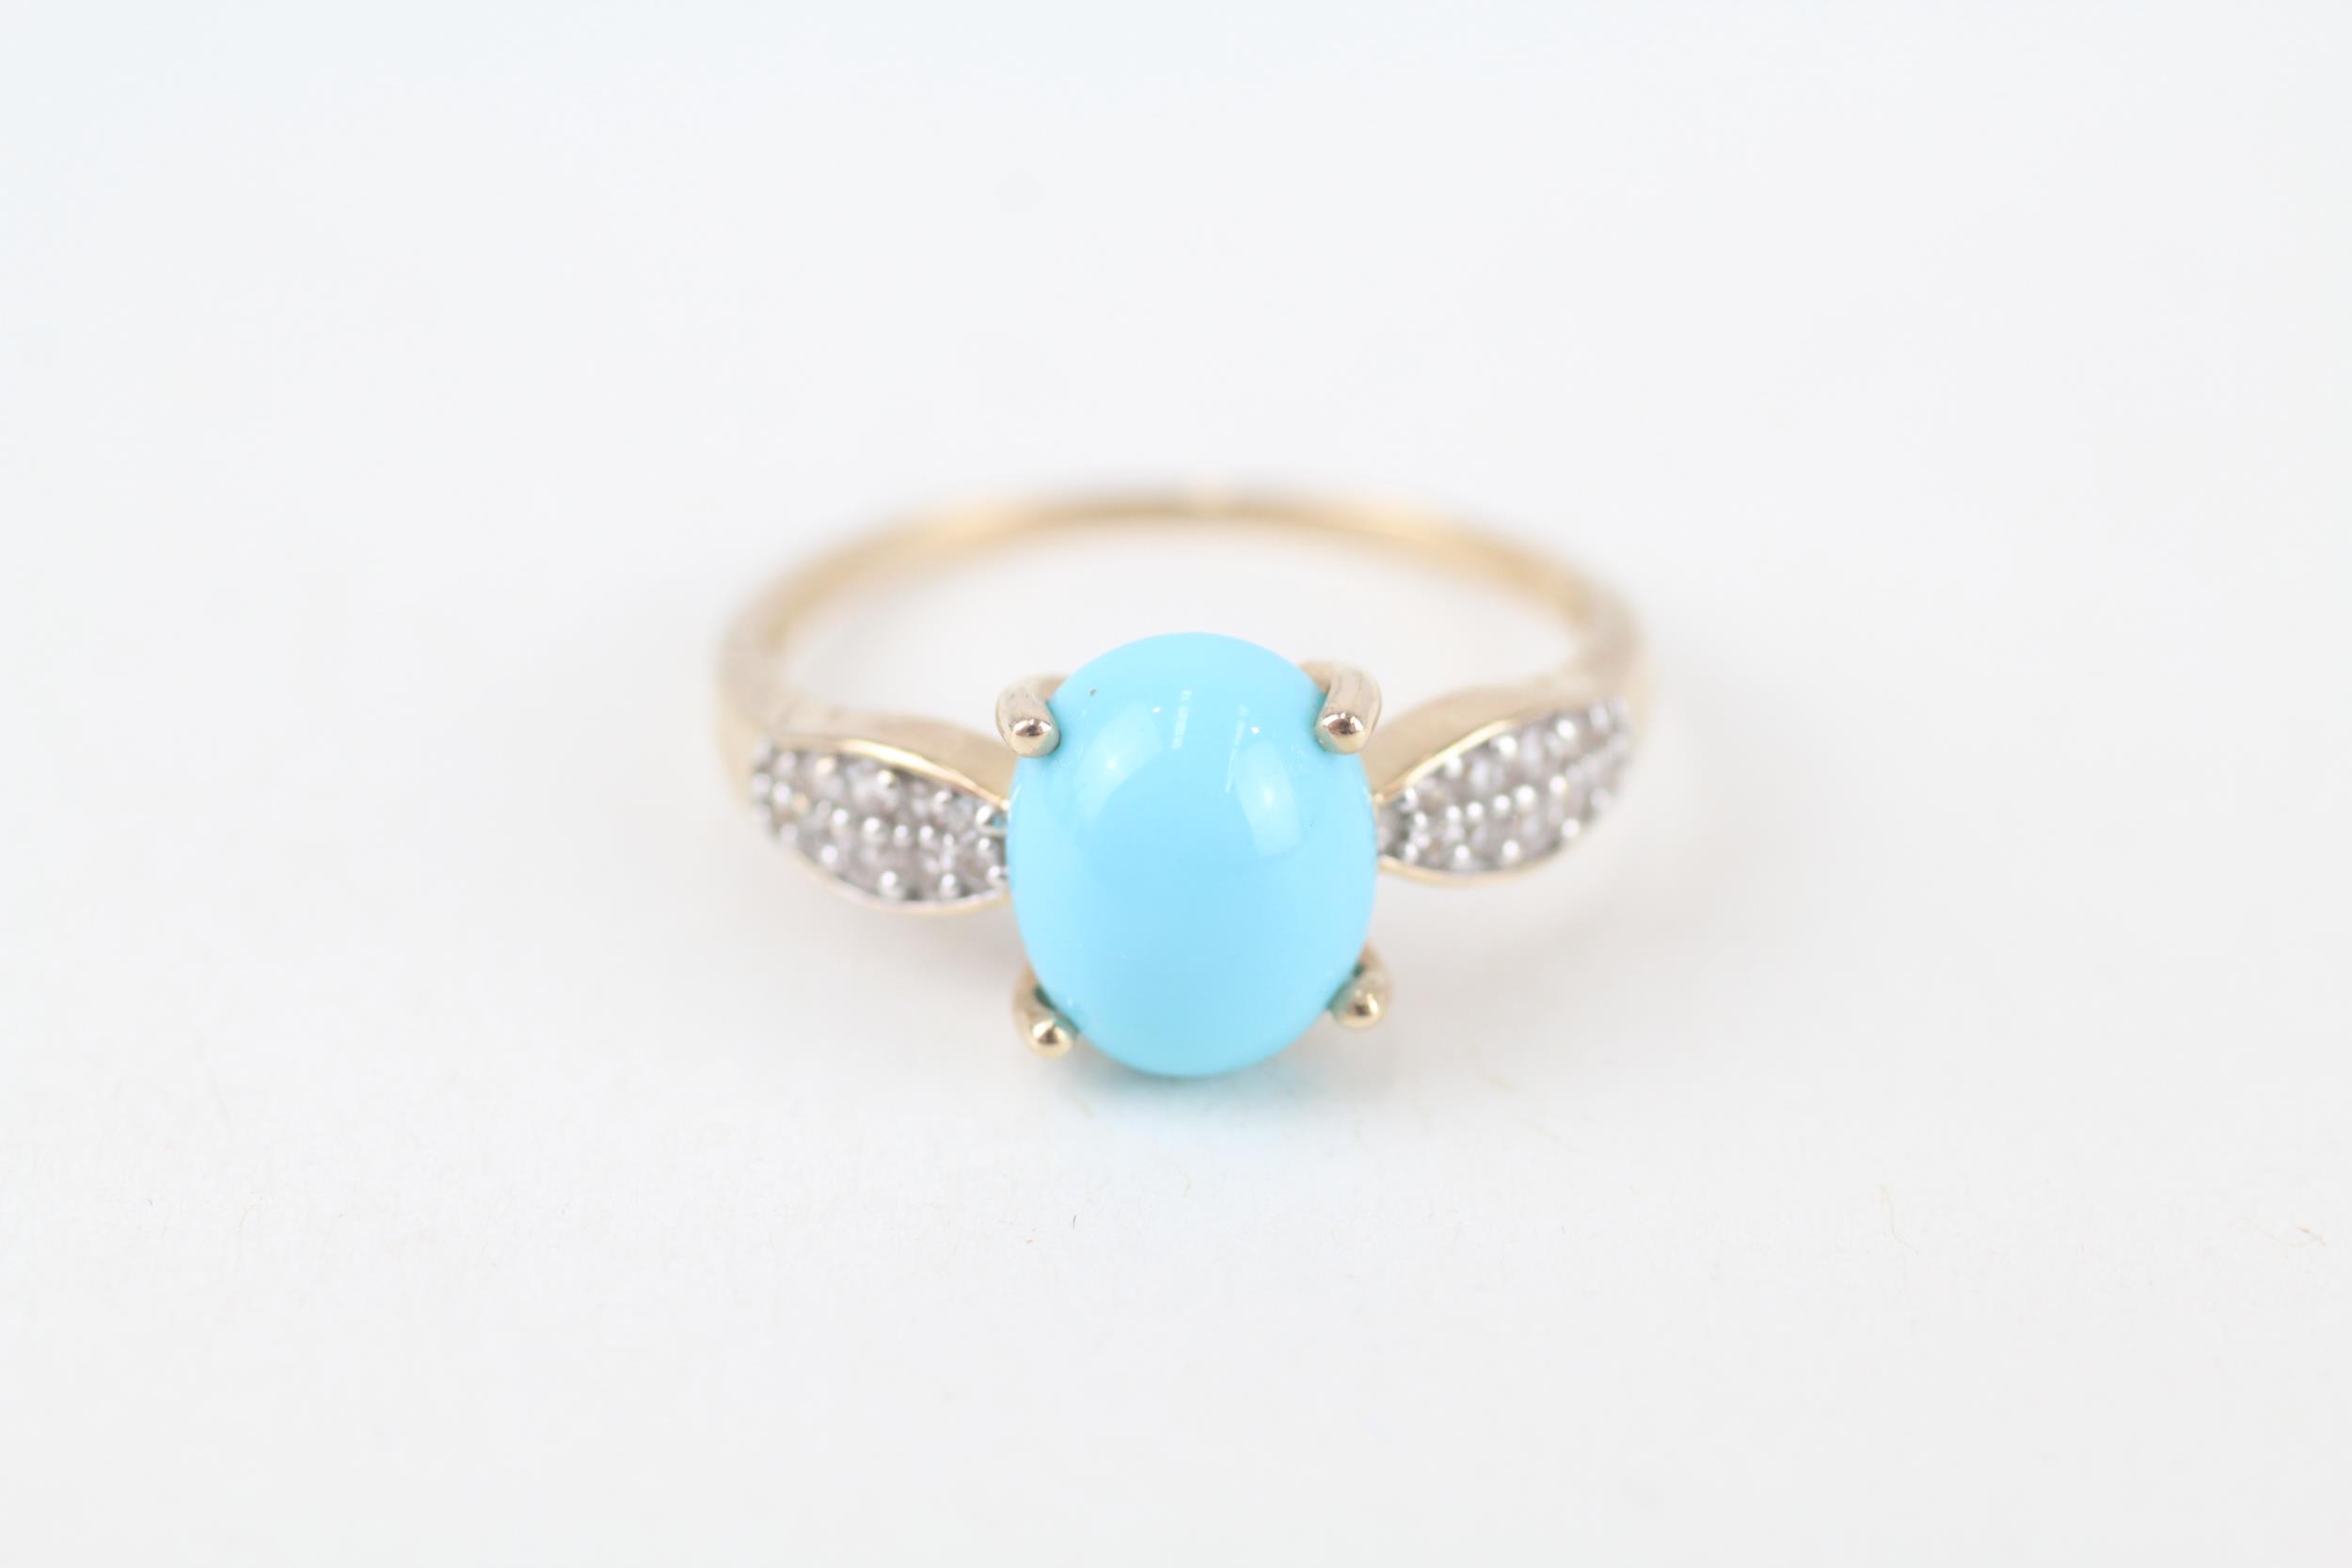 9ct gold blue gemstone single stone ring with white gemstone side Size R 1/2 2.5 g - Image 2 of 5